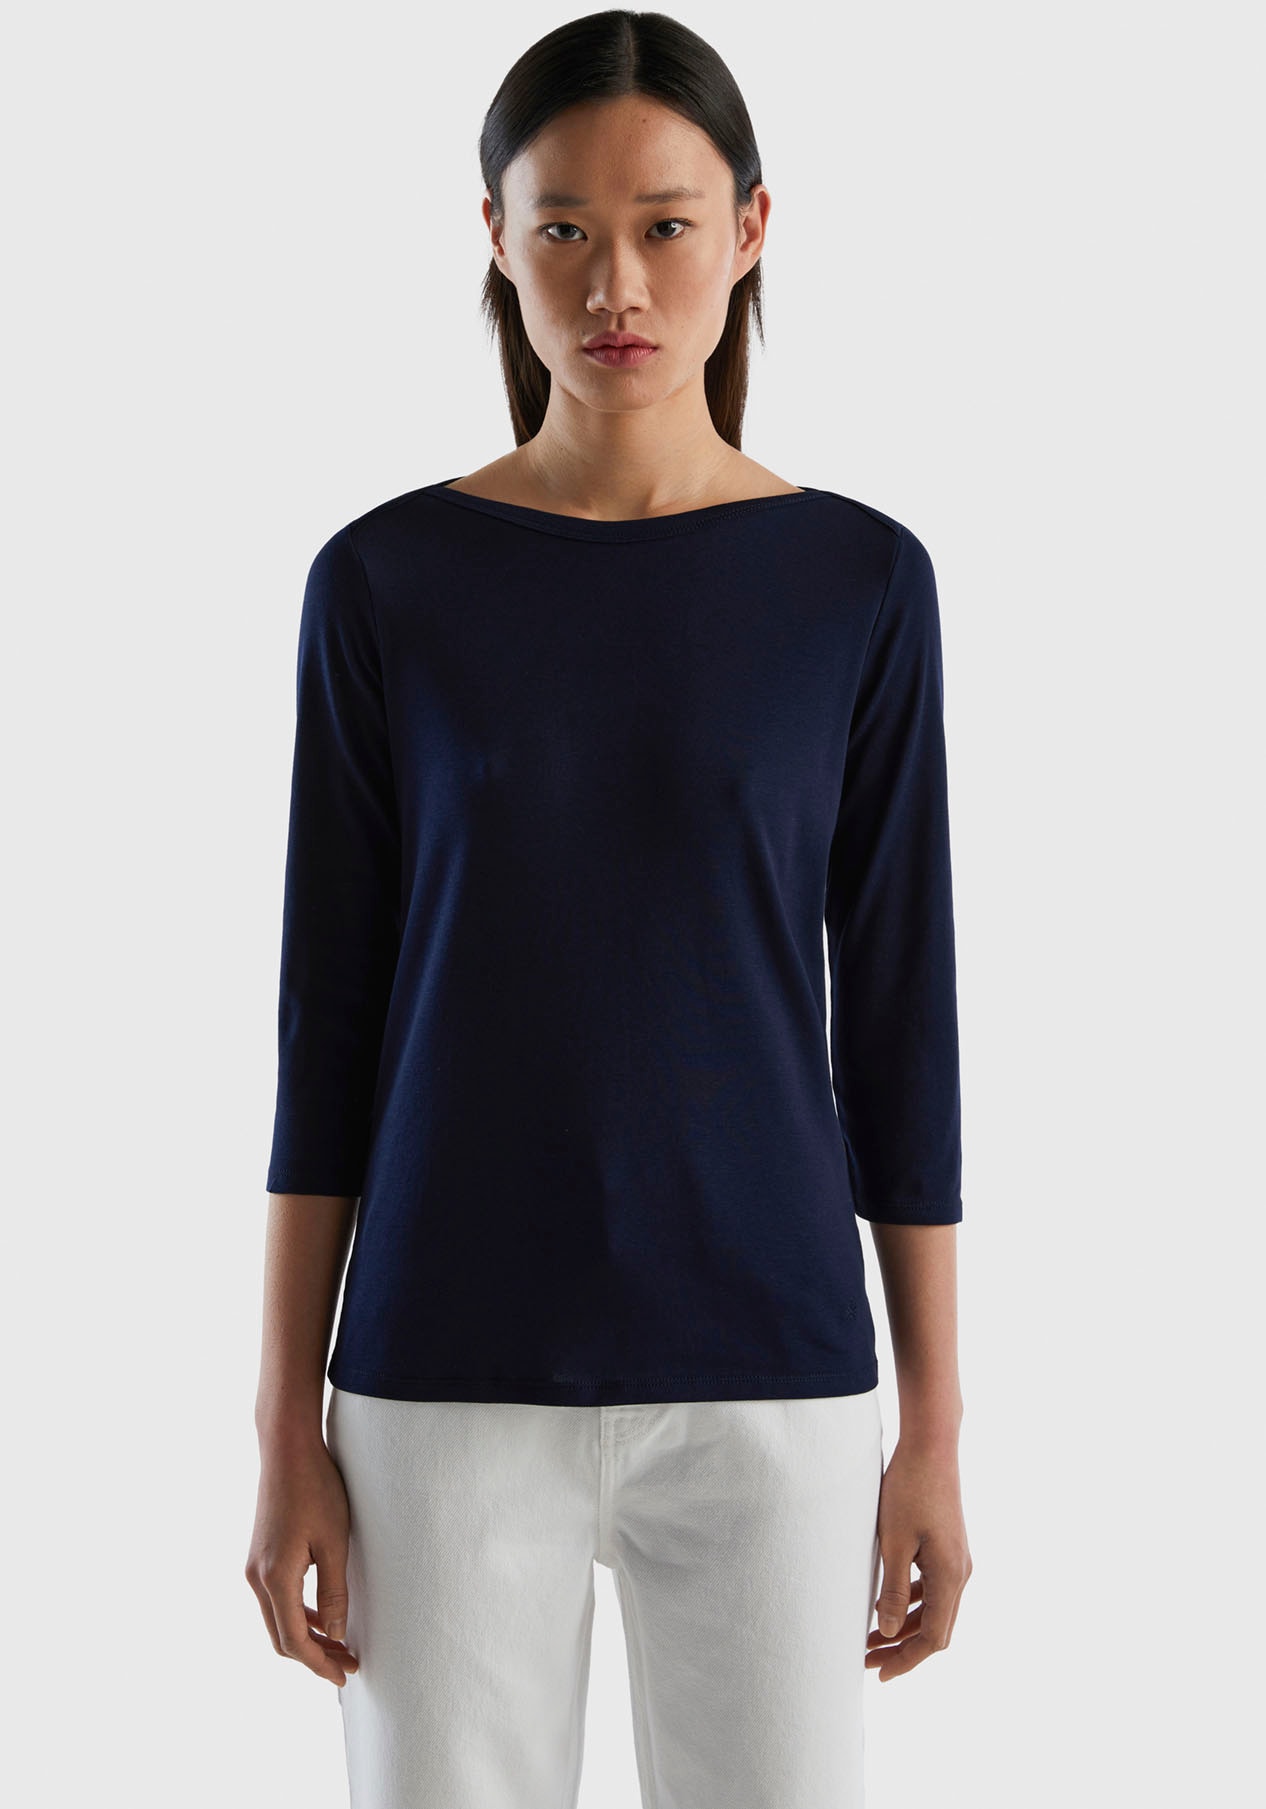 Basic-Look of versandkostenfrei Colors im 3/4-Arm-Shirt, United Benetton ♕ kombistarken kaufen